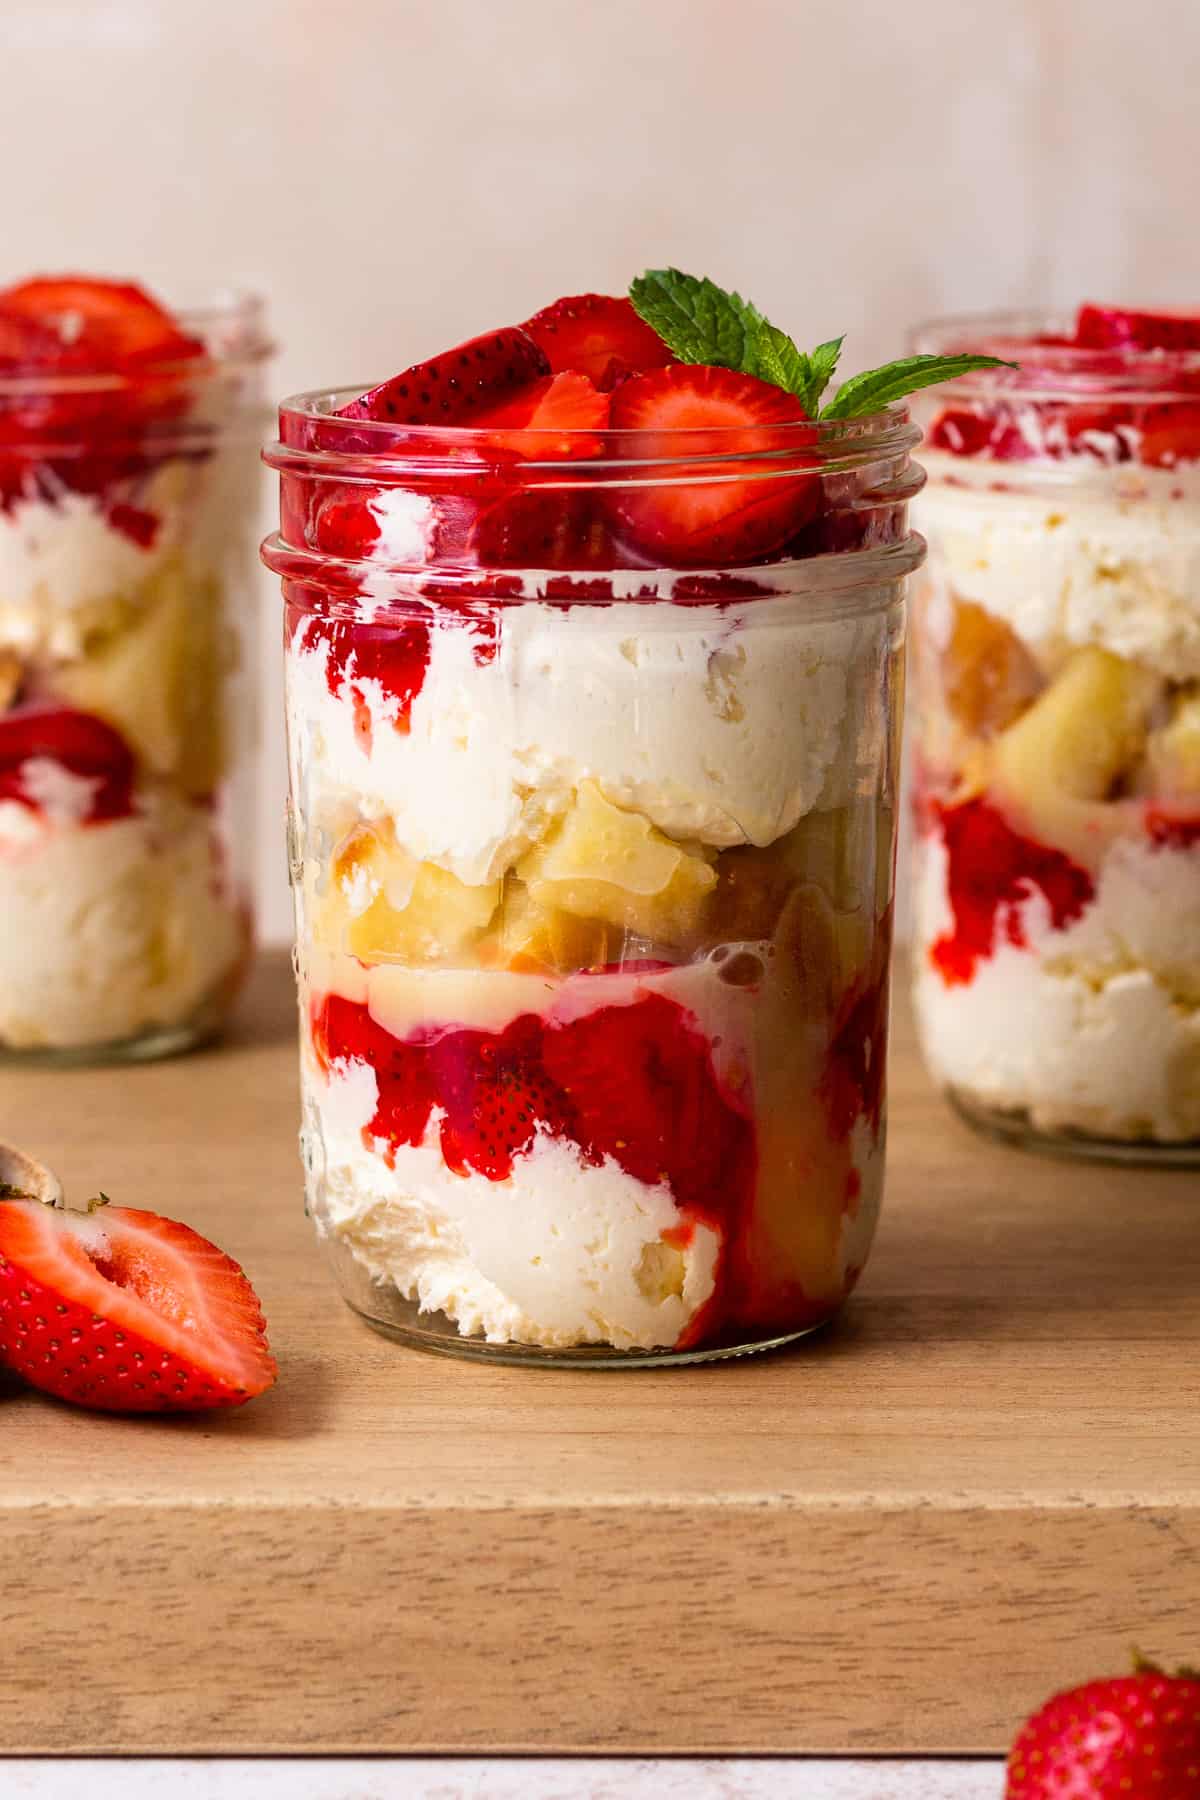 https://www.thecookierookie.com/wp-content/uploads/2014/03/strawberry-shortcake-cups-recipe-2.jpg